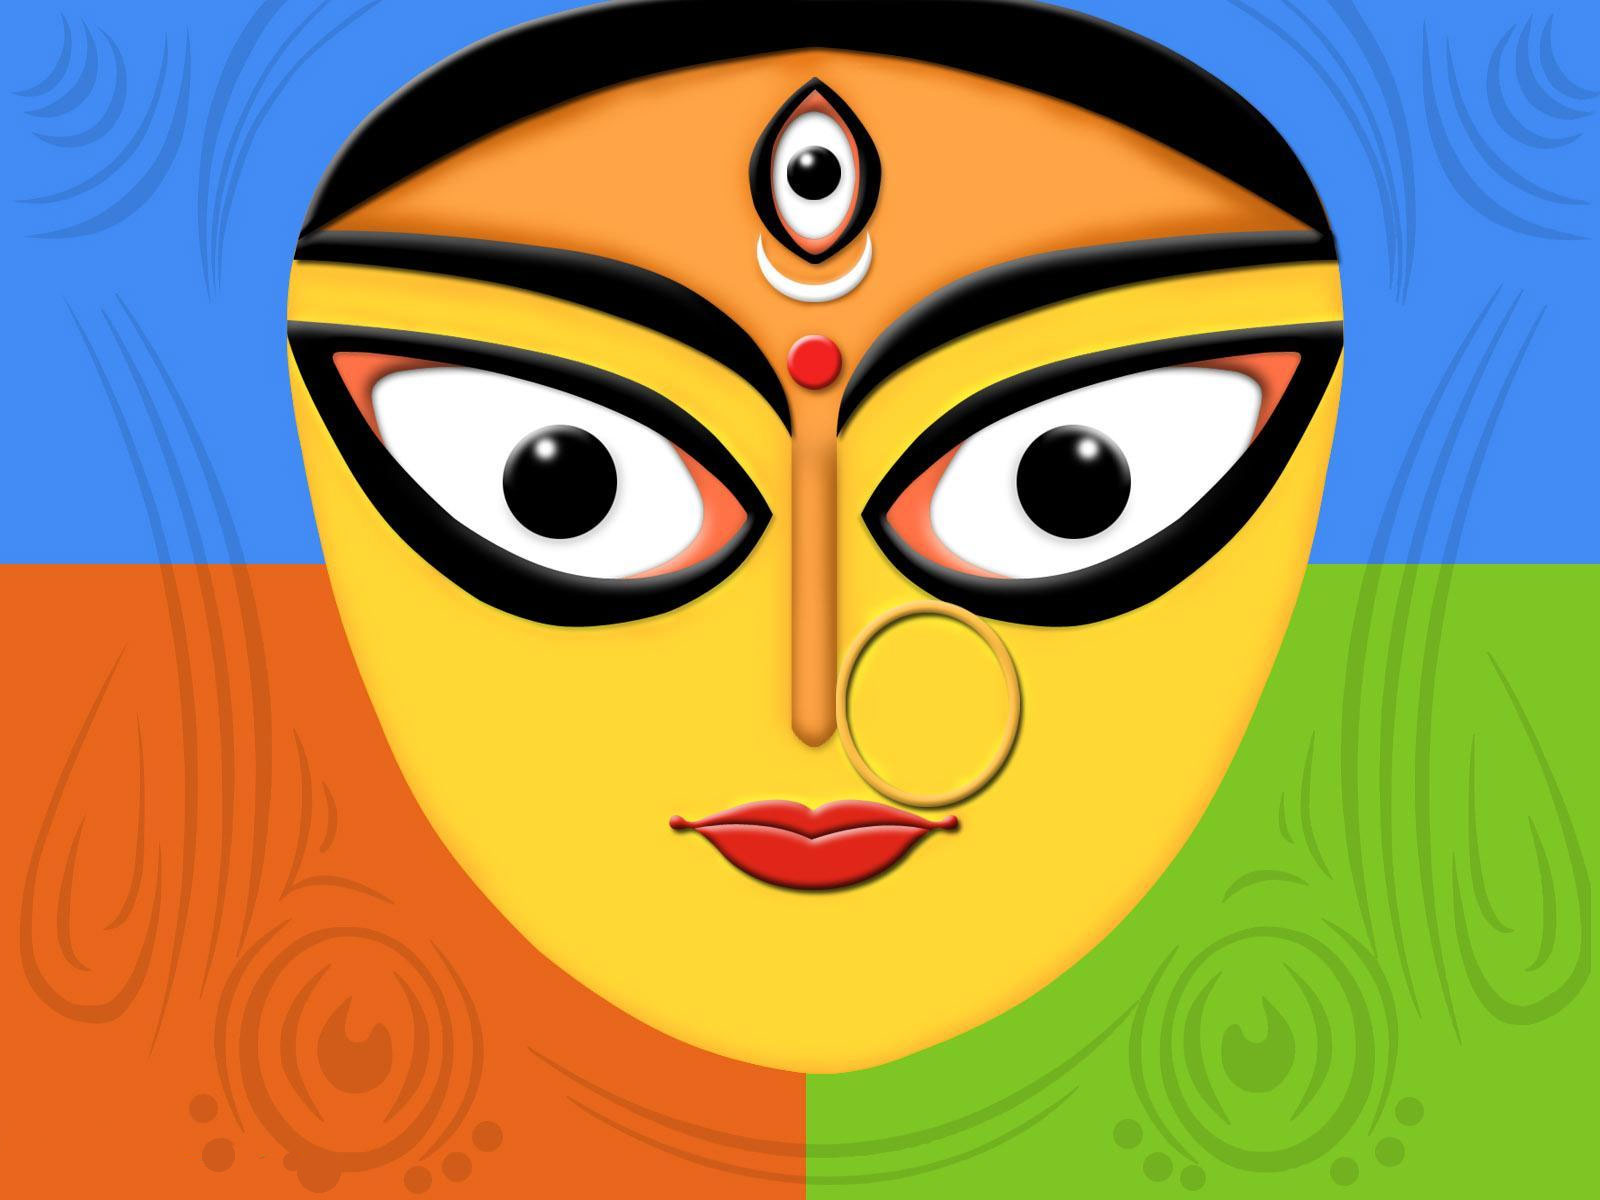 Maa Durga Wallpaper for Laptop & Facebook Download